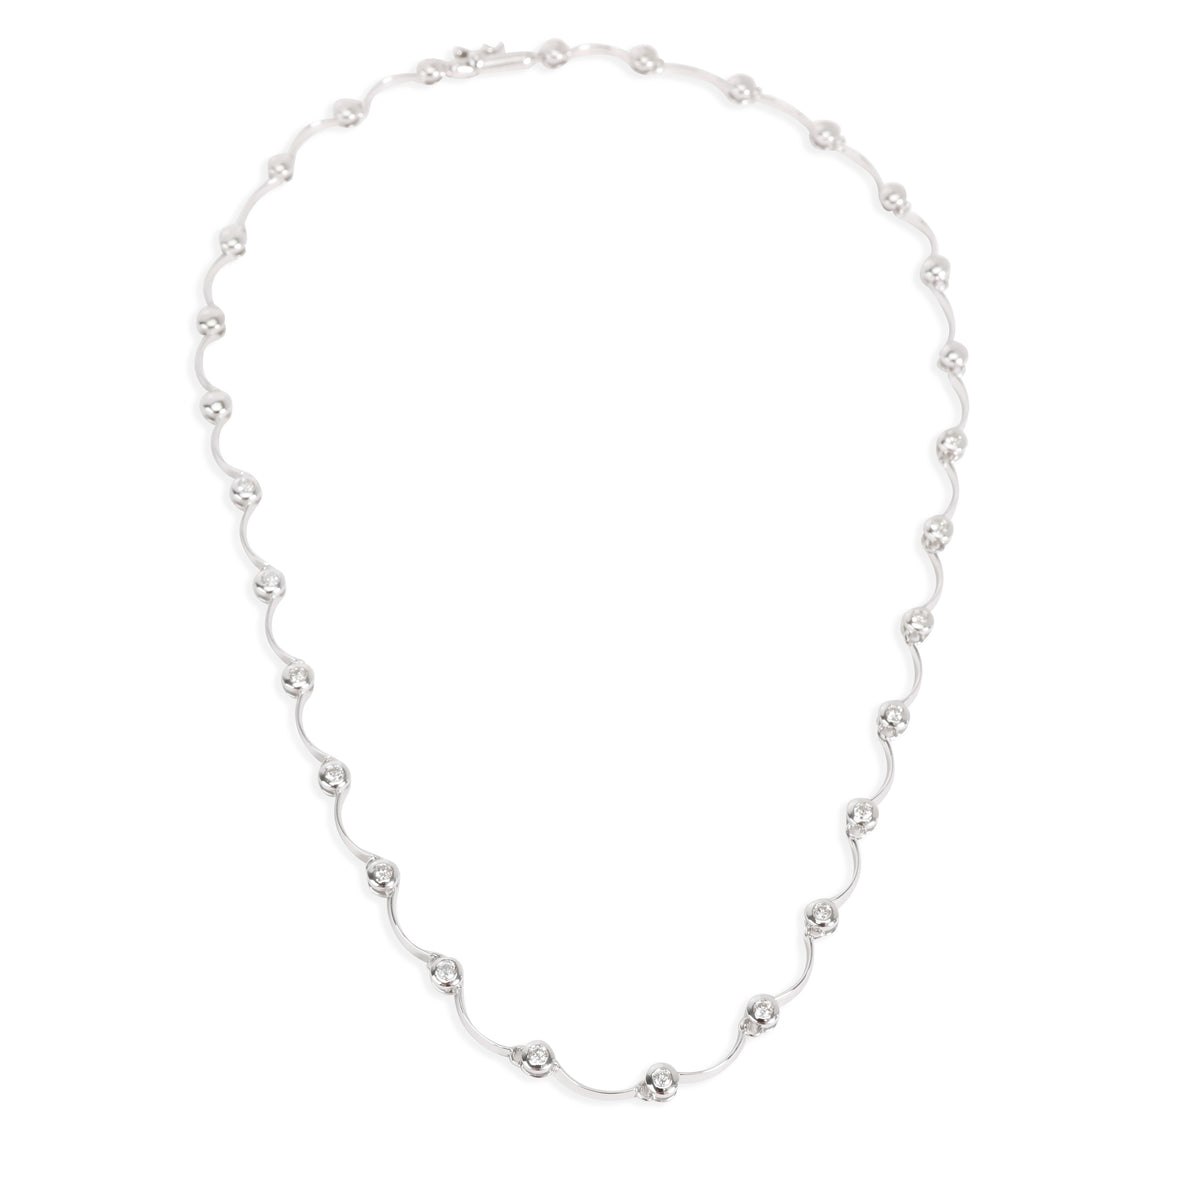 Bezel Set Diamond Necklace in 18K White Gold 0.45 CTW